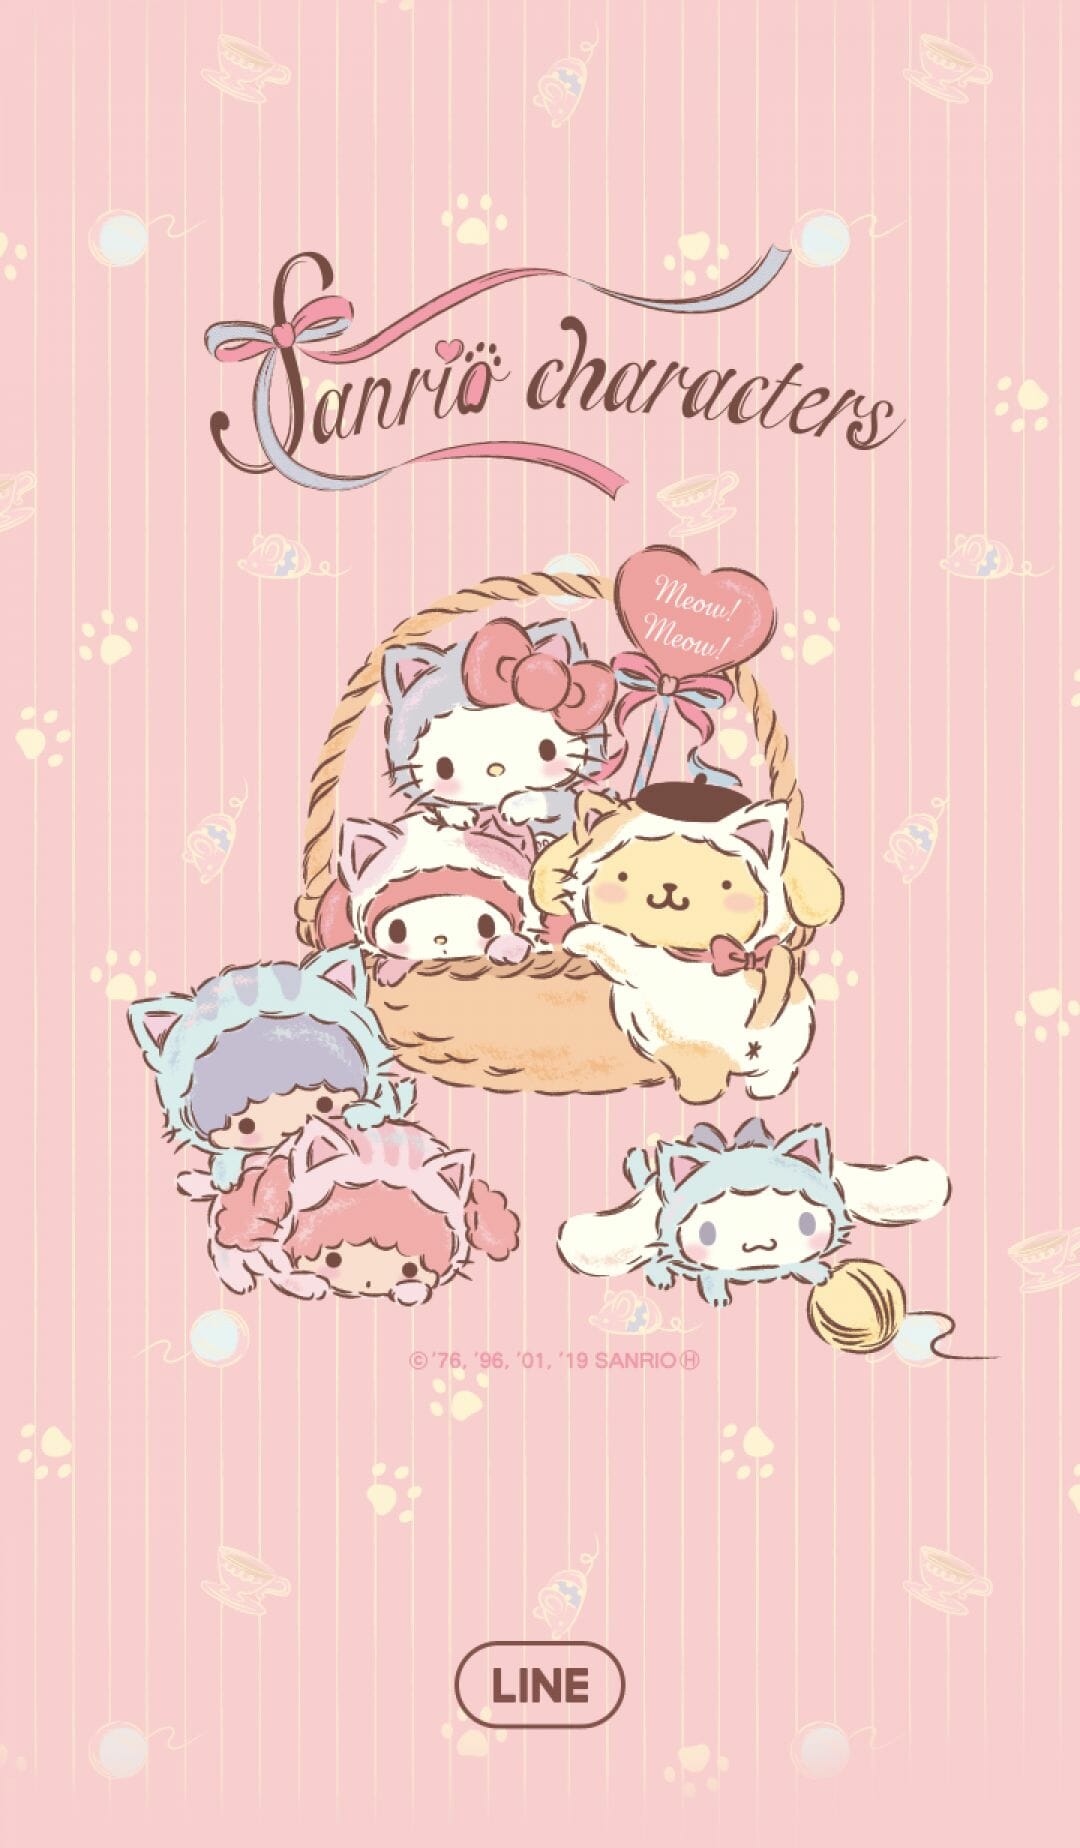 SANRIO CHARACTERS (Kitties). Line Wallpaper in 2019. Hello